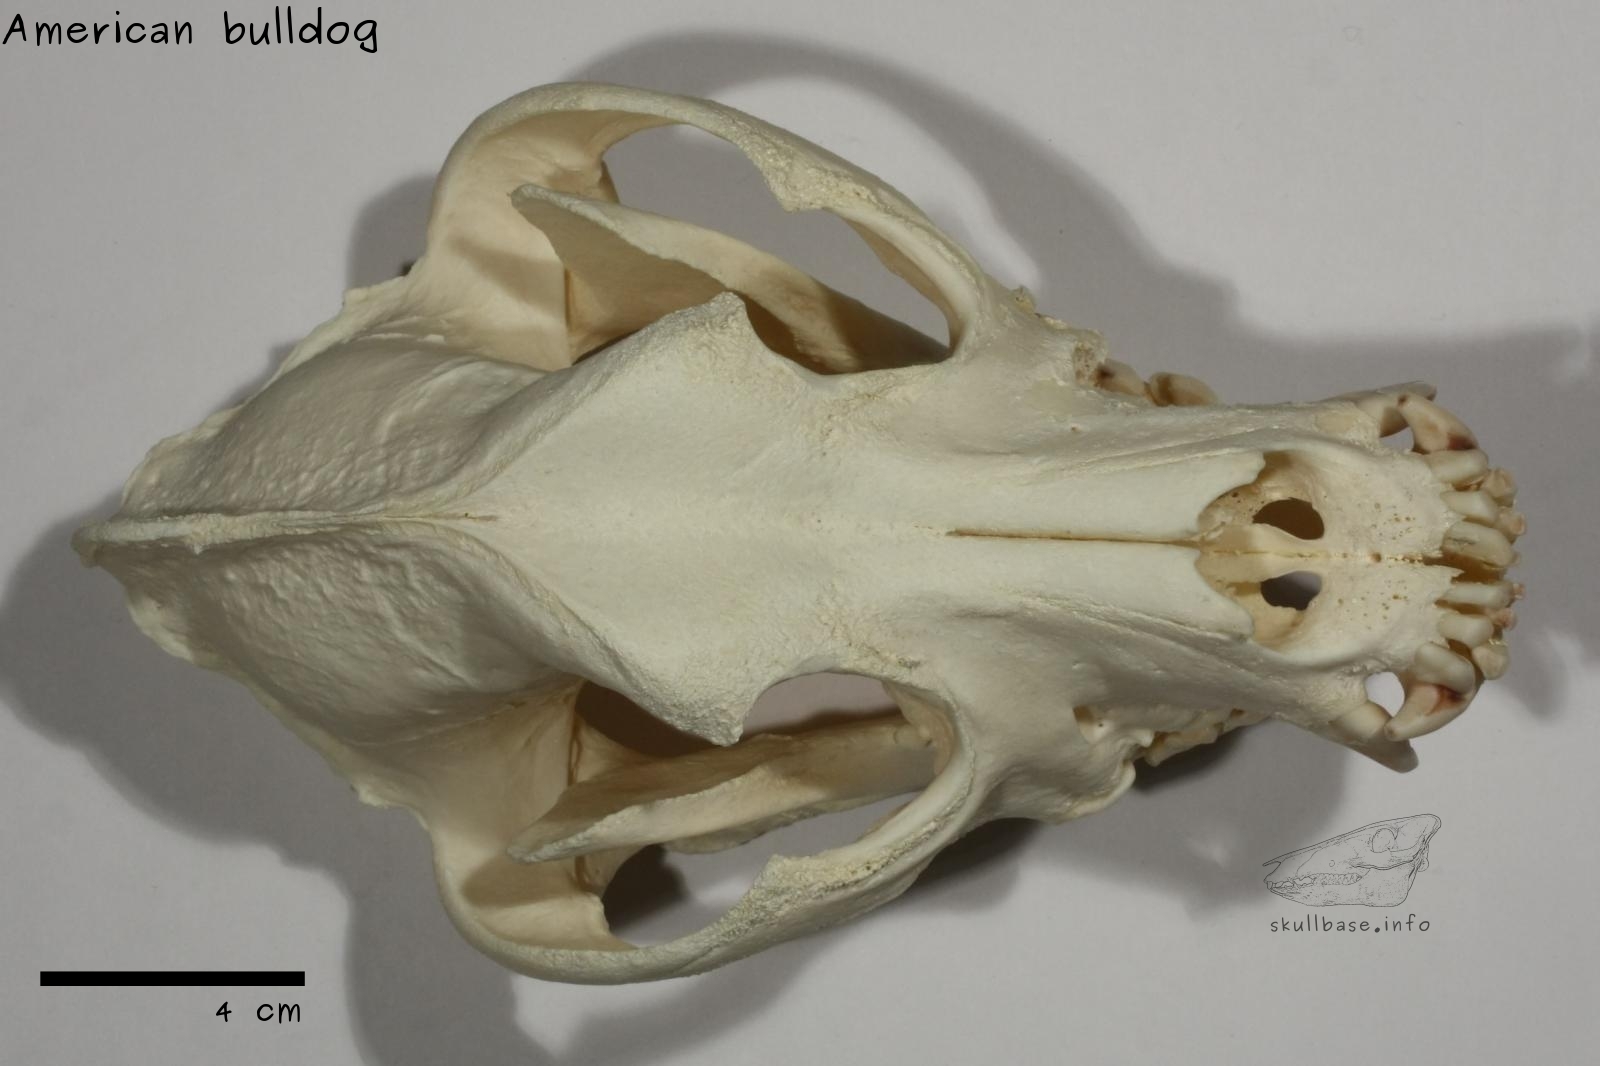 American bulldog (Canis lupus familiaris) skull dorsal view